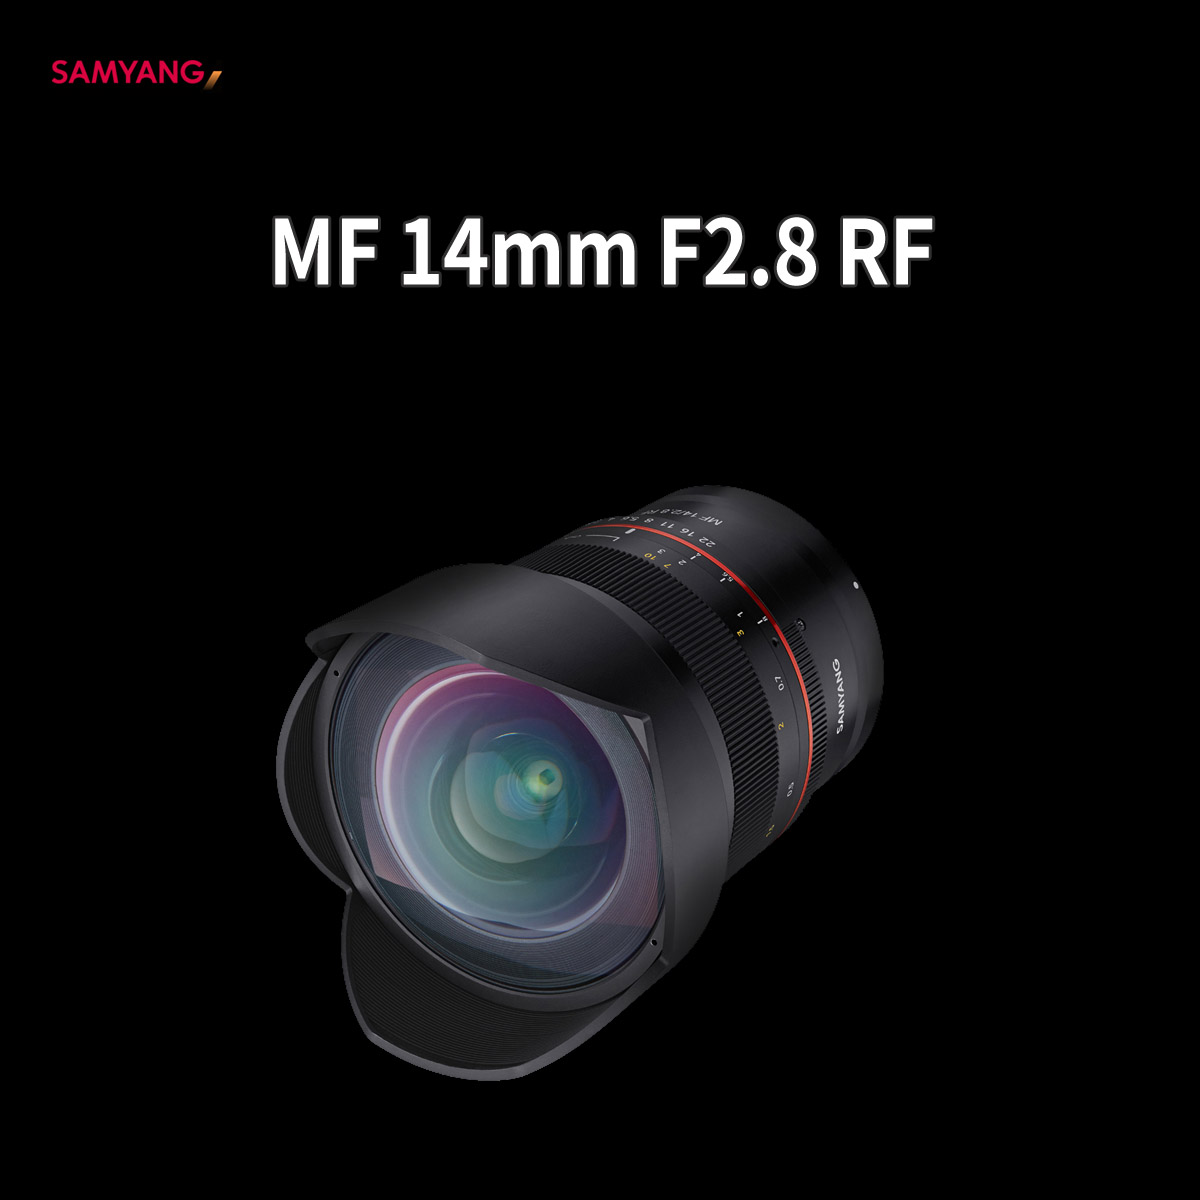 samyang_MF14mm_F2.8_RF